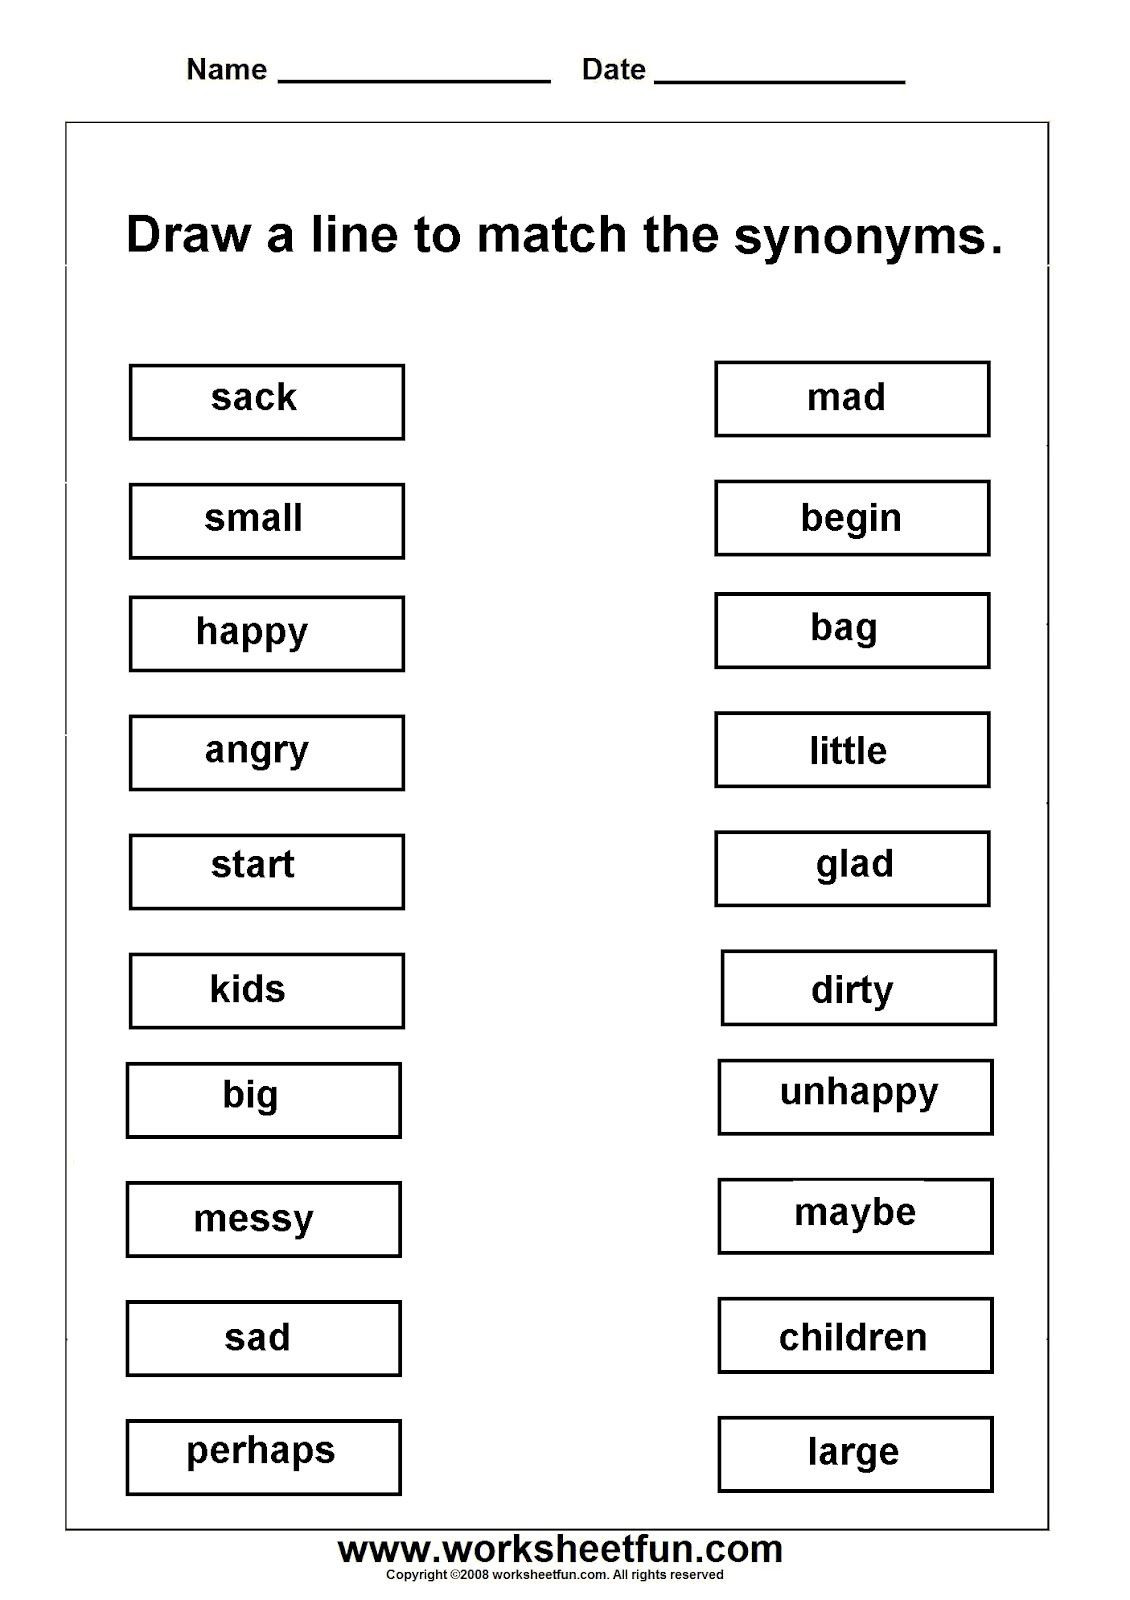 Synonyms Worksheet First Grade Synonym Worksheets for 1st Grade Synonyms Worksheets